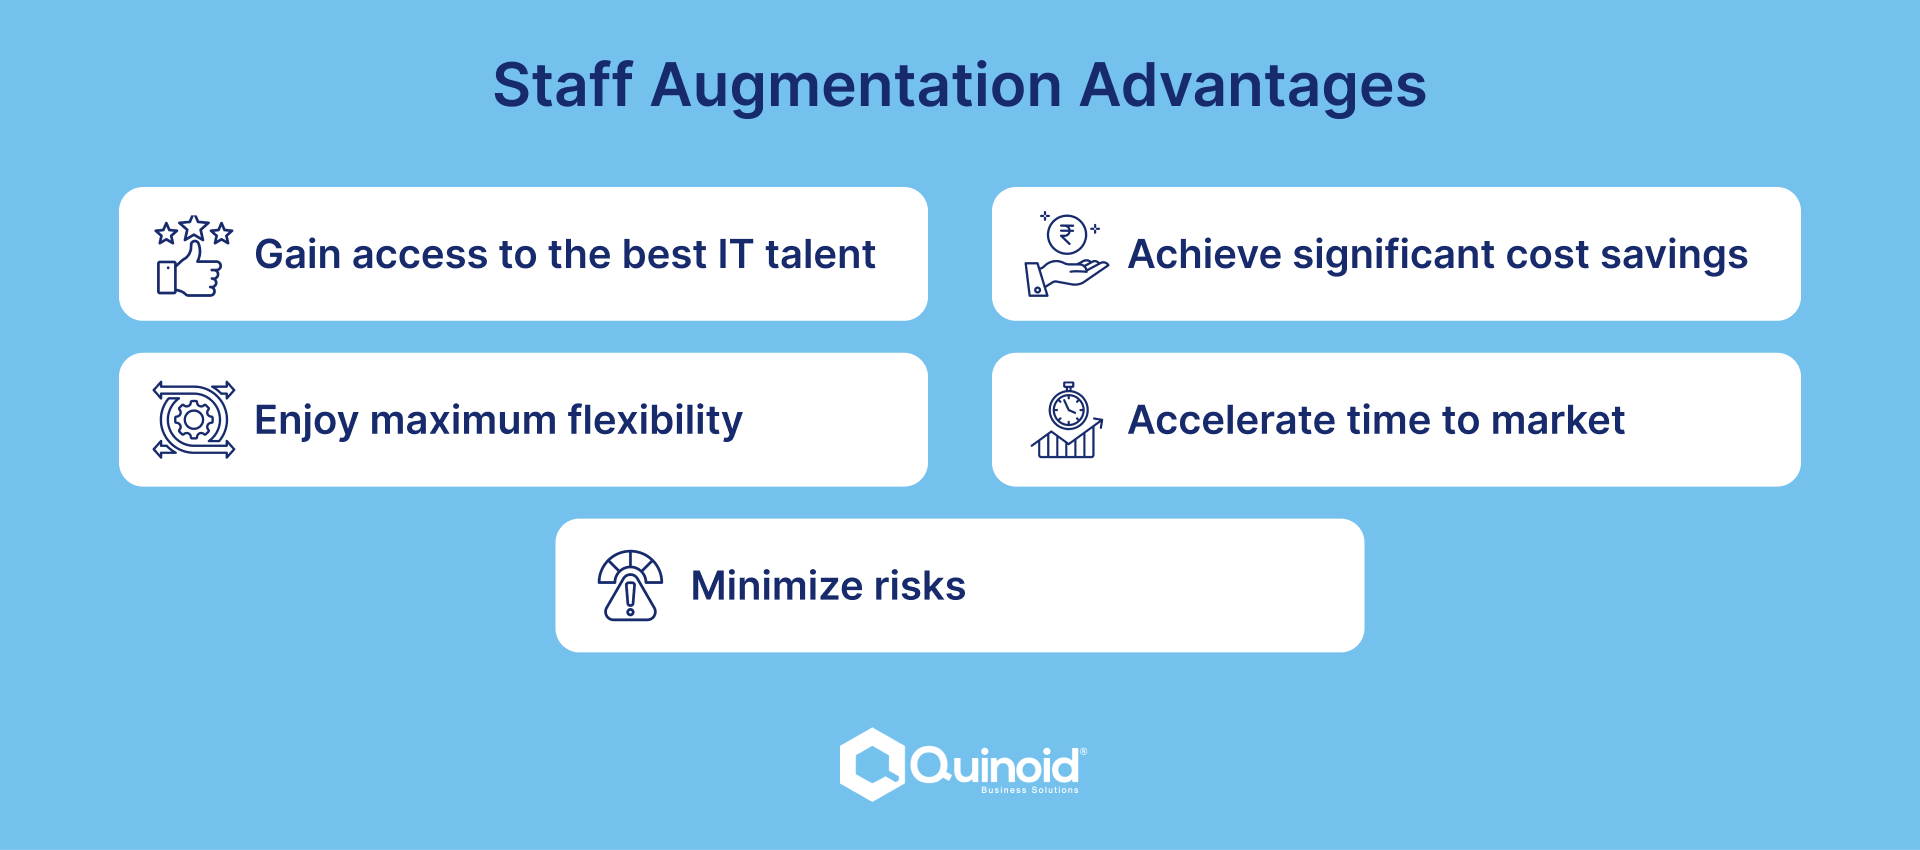 Staff Augmentation Advantages